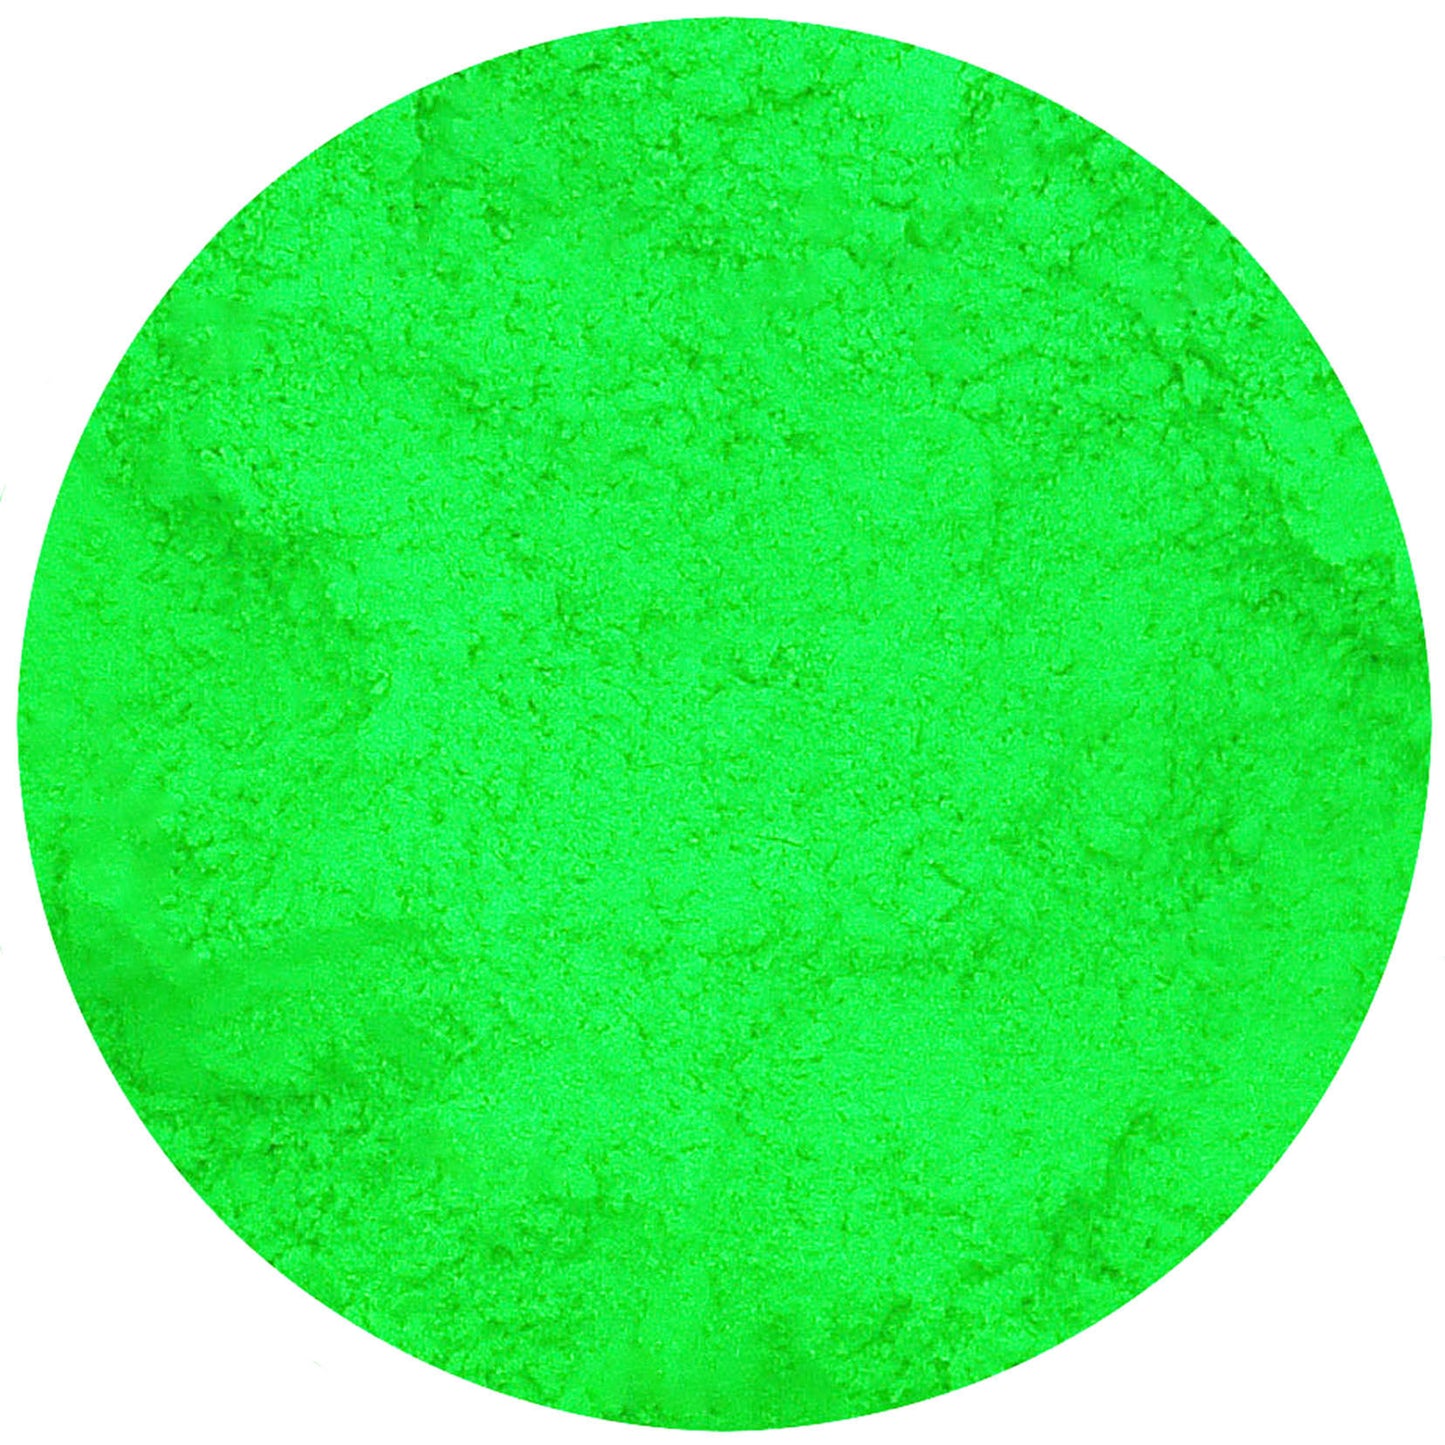 Neon Green | Fluorescent Pigment Dye | Candles, Wax Melt, Cosmetics, Bath Bombs, Shower Gel | Truly Personal